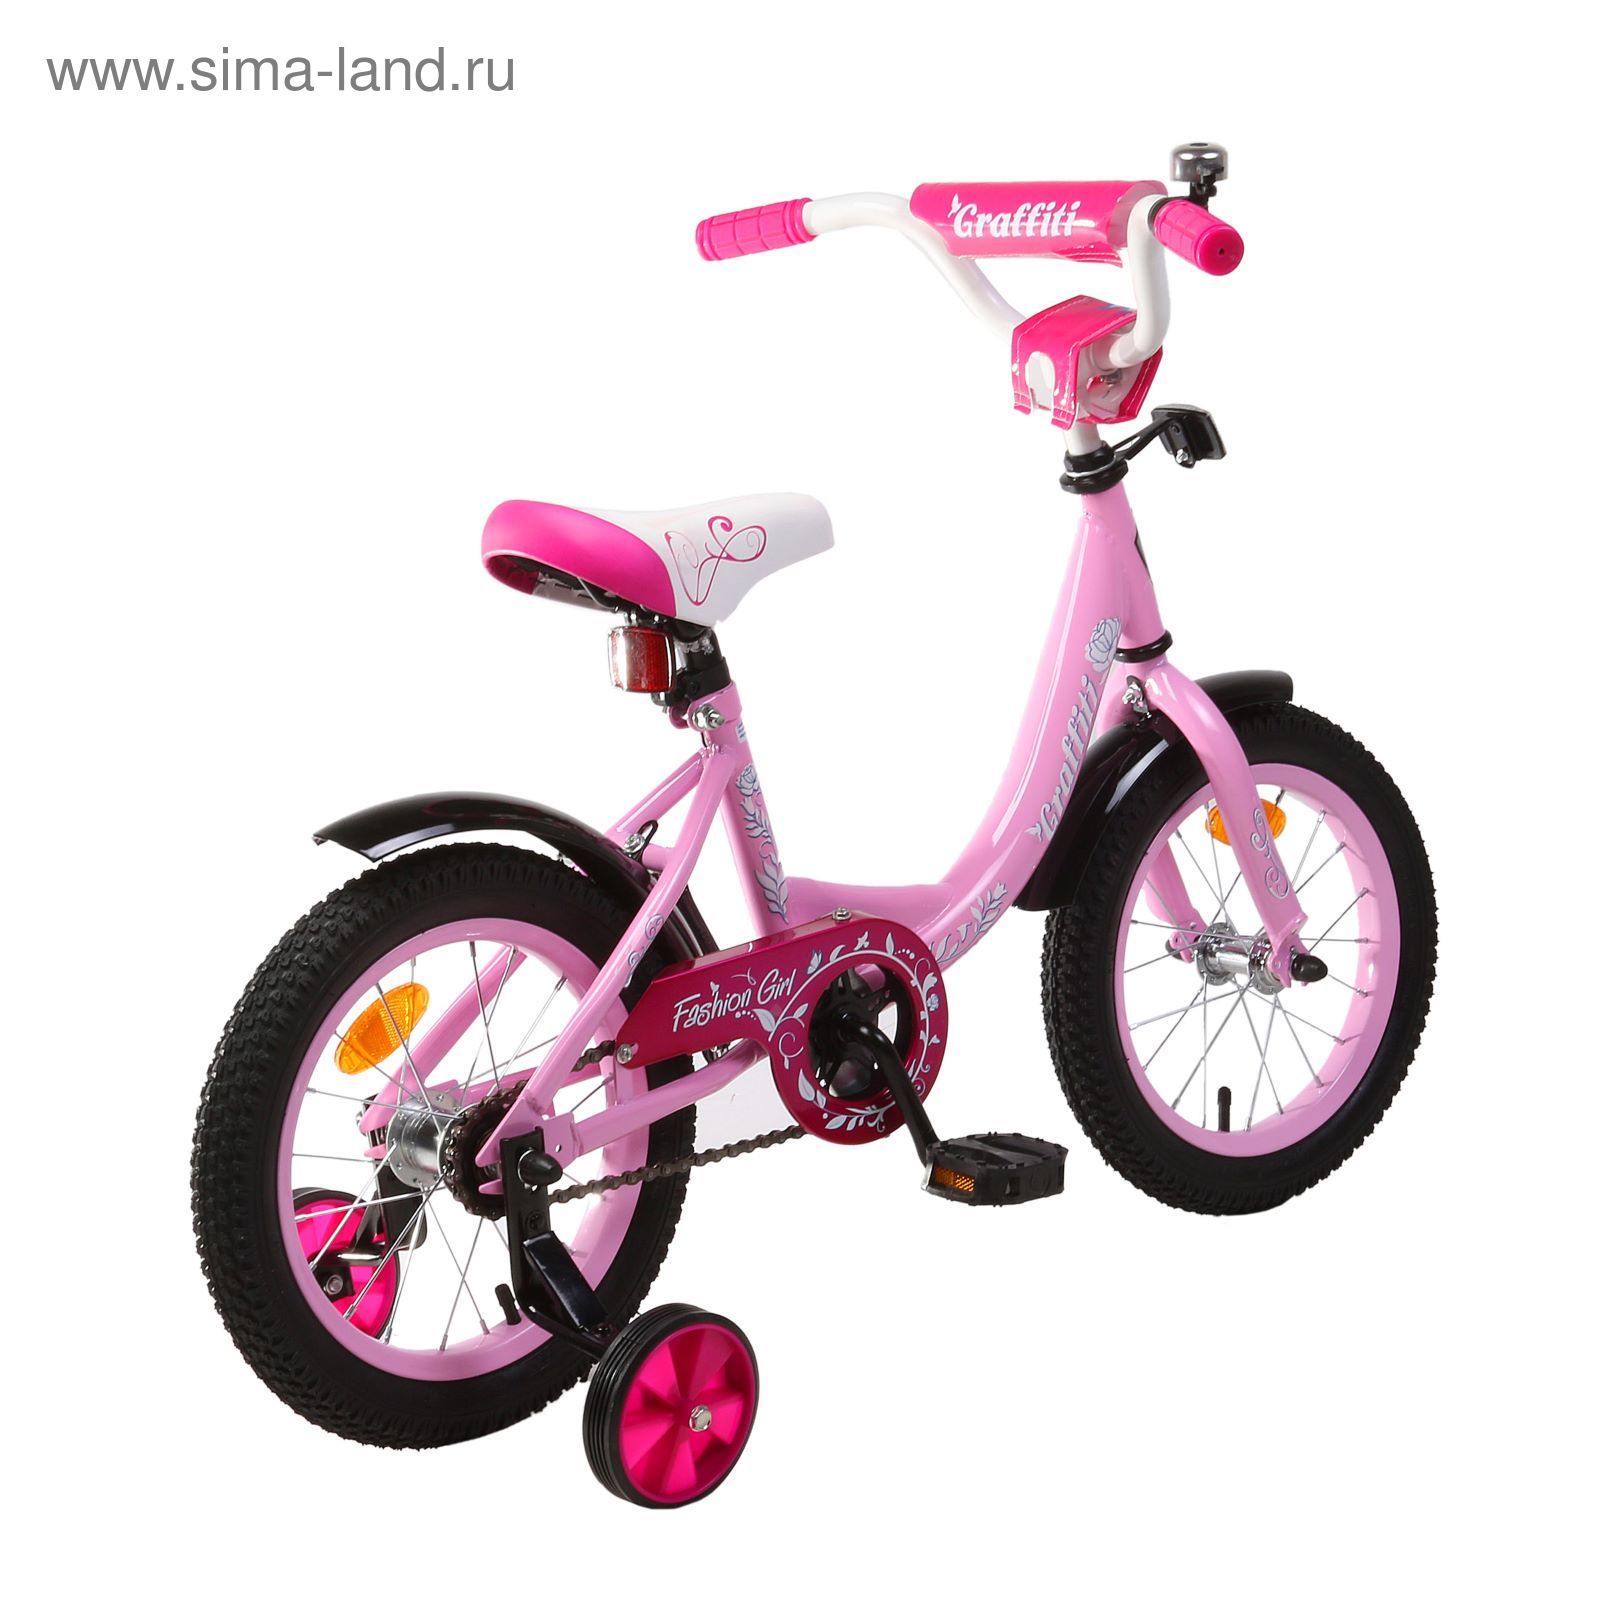 Велосипед 14" GRAFFITI Fashion Girl RUS, 2017, цвет розовый